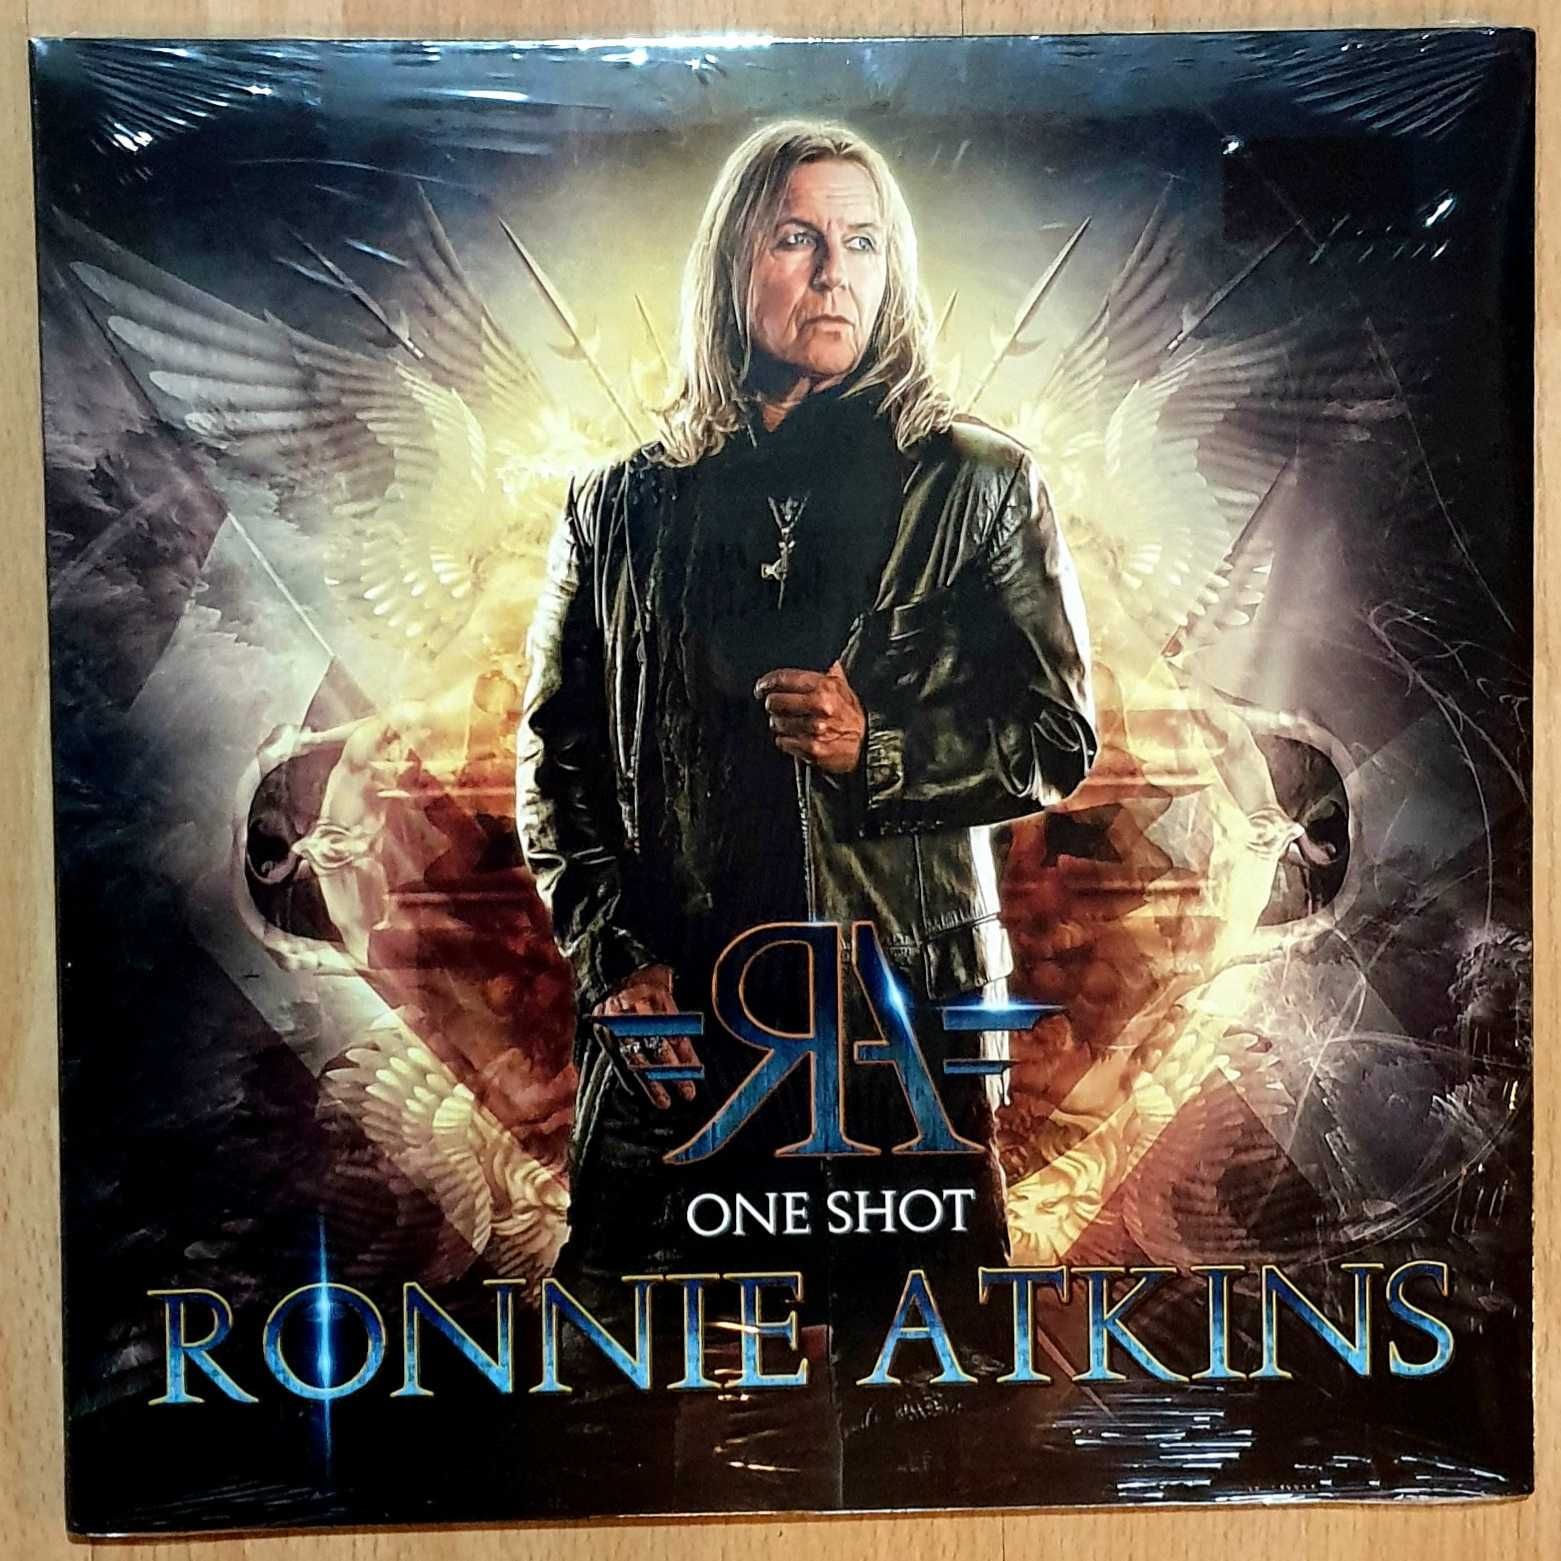 Ronnie Atkins One Shot 1LP Black Vinyl Limited Edition Winyl Okazja